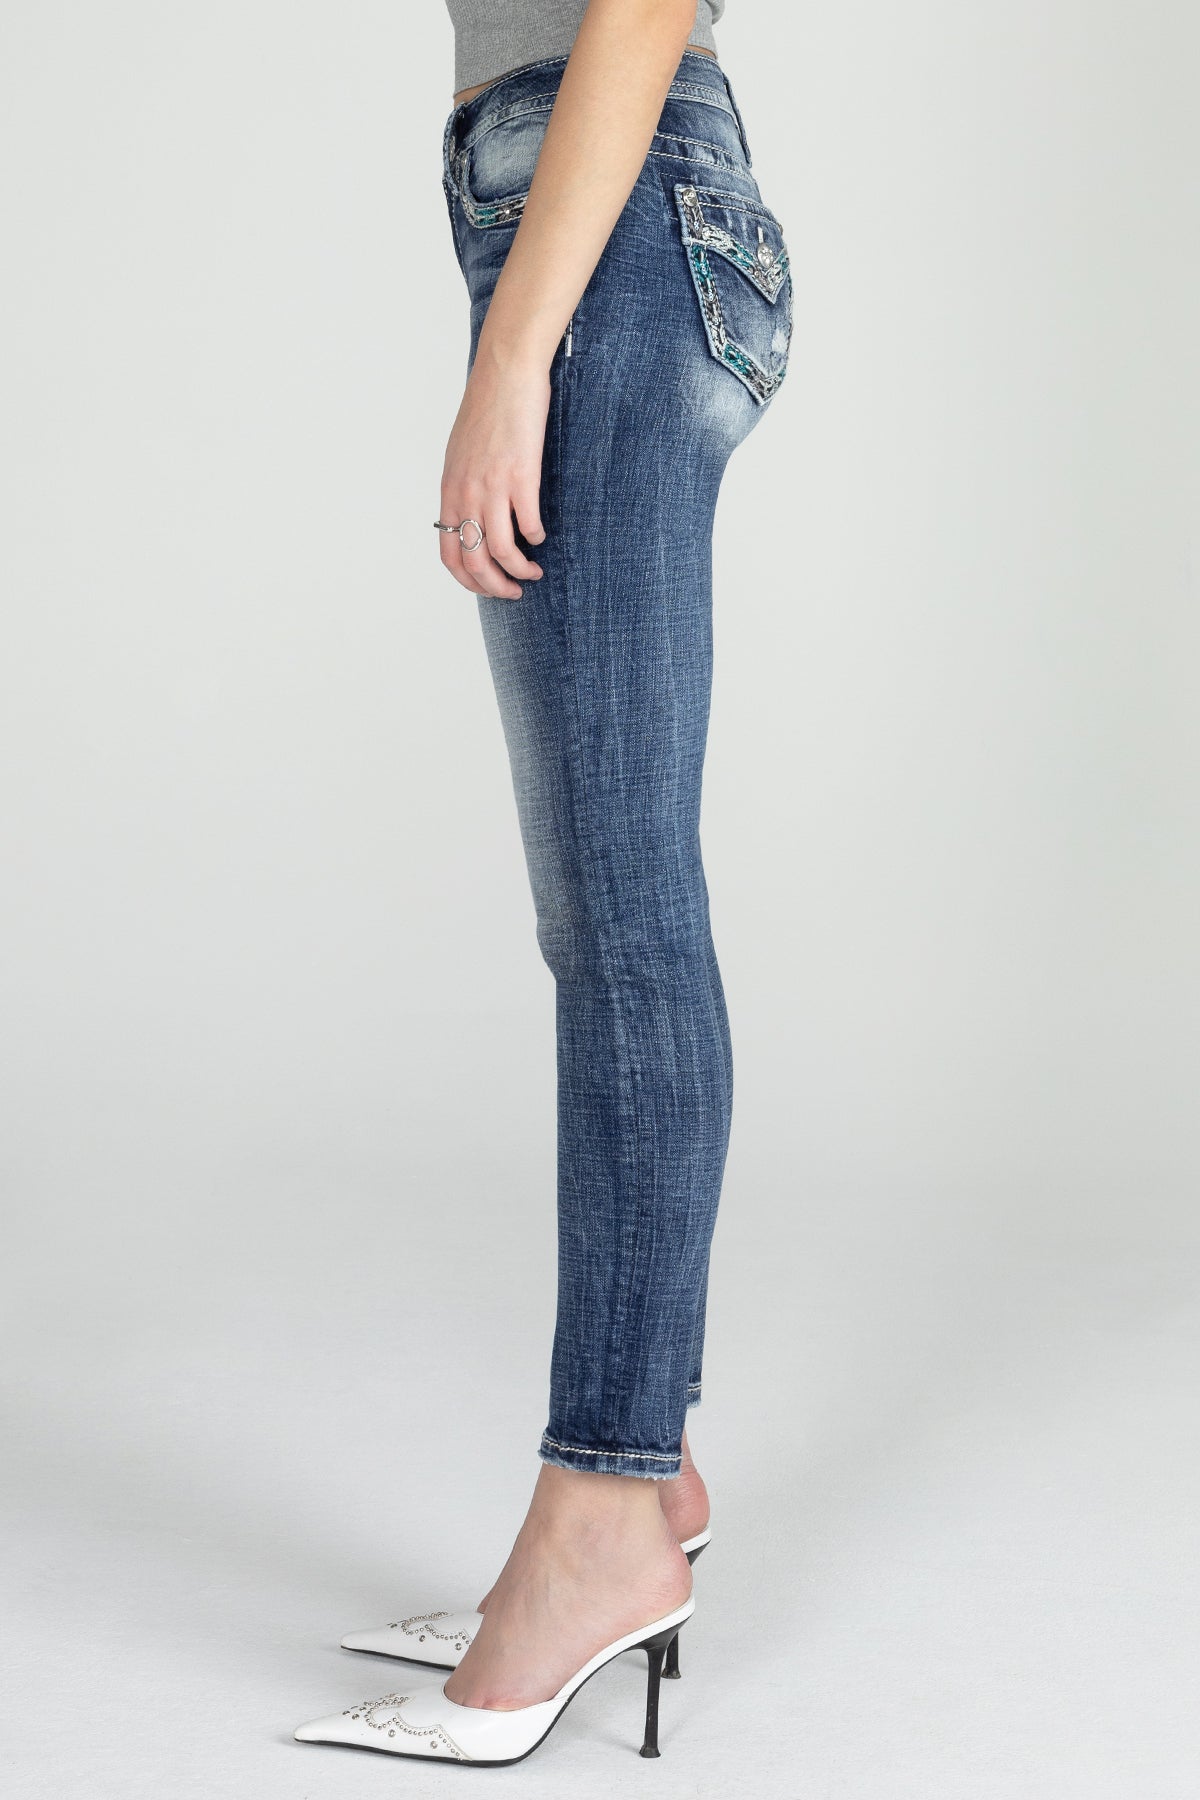 Multicolor Patterned Skinny Jeans